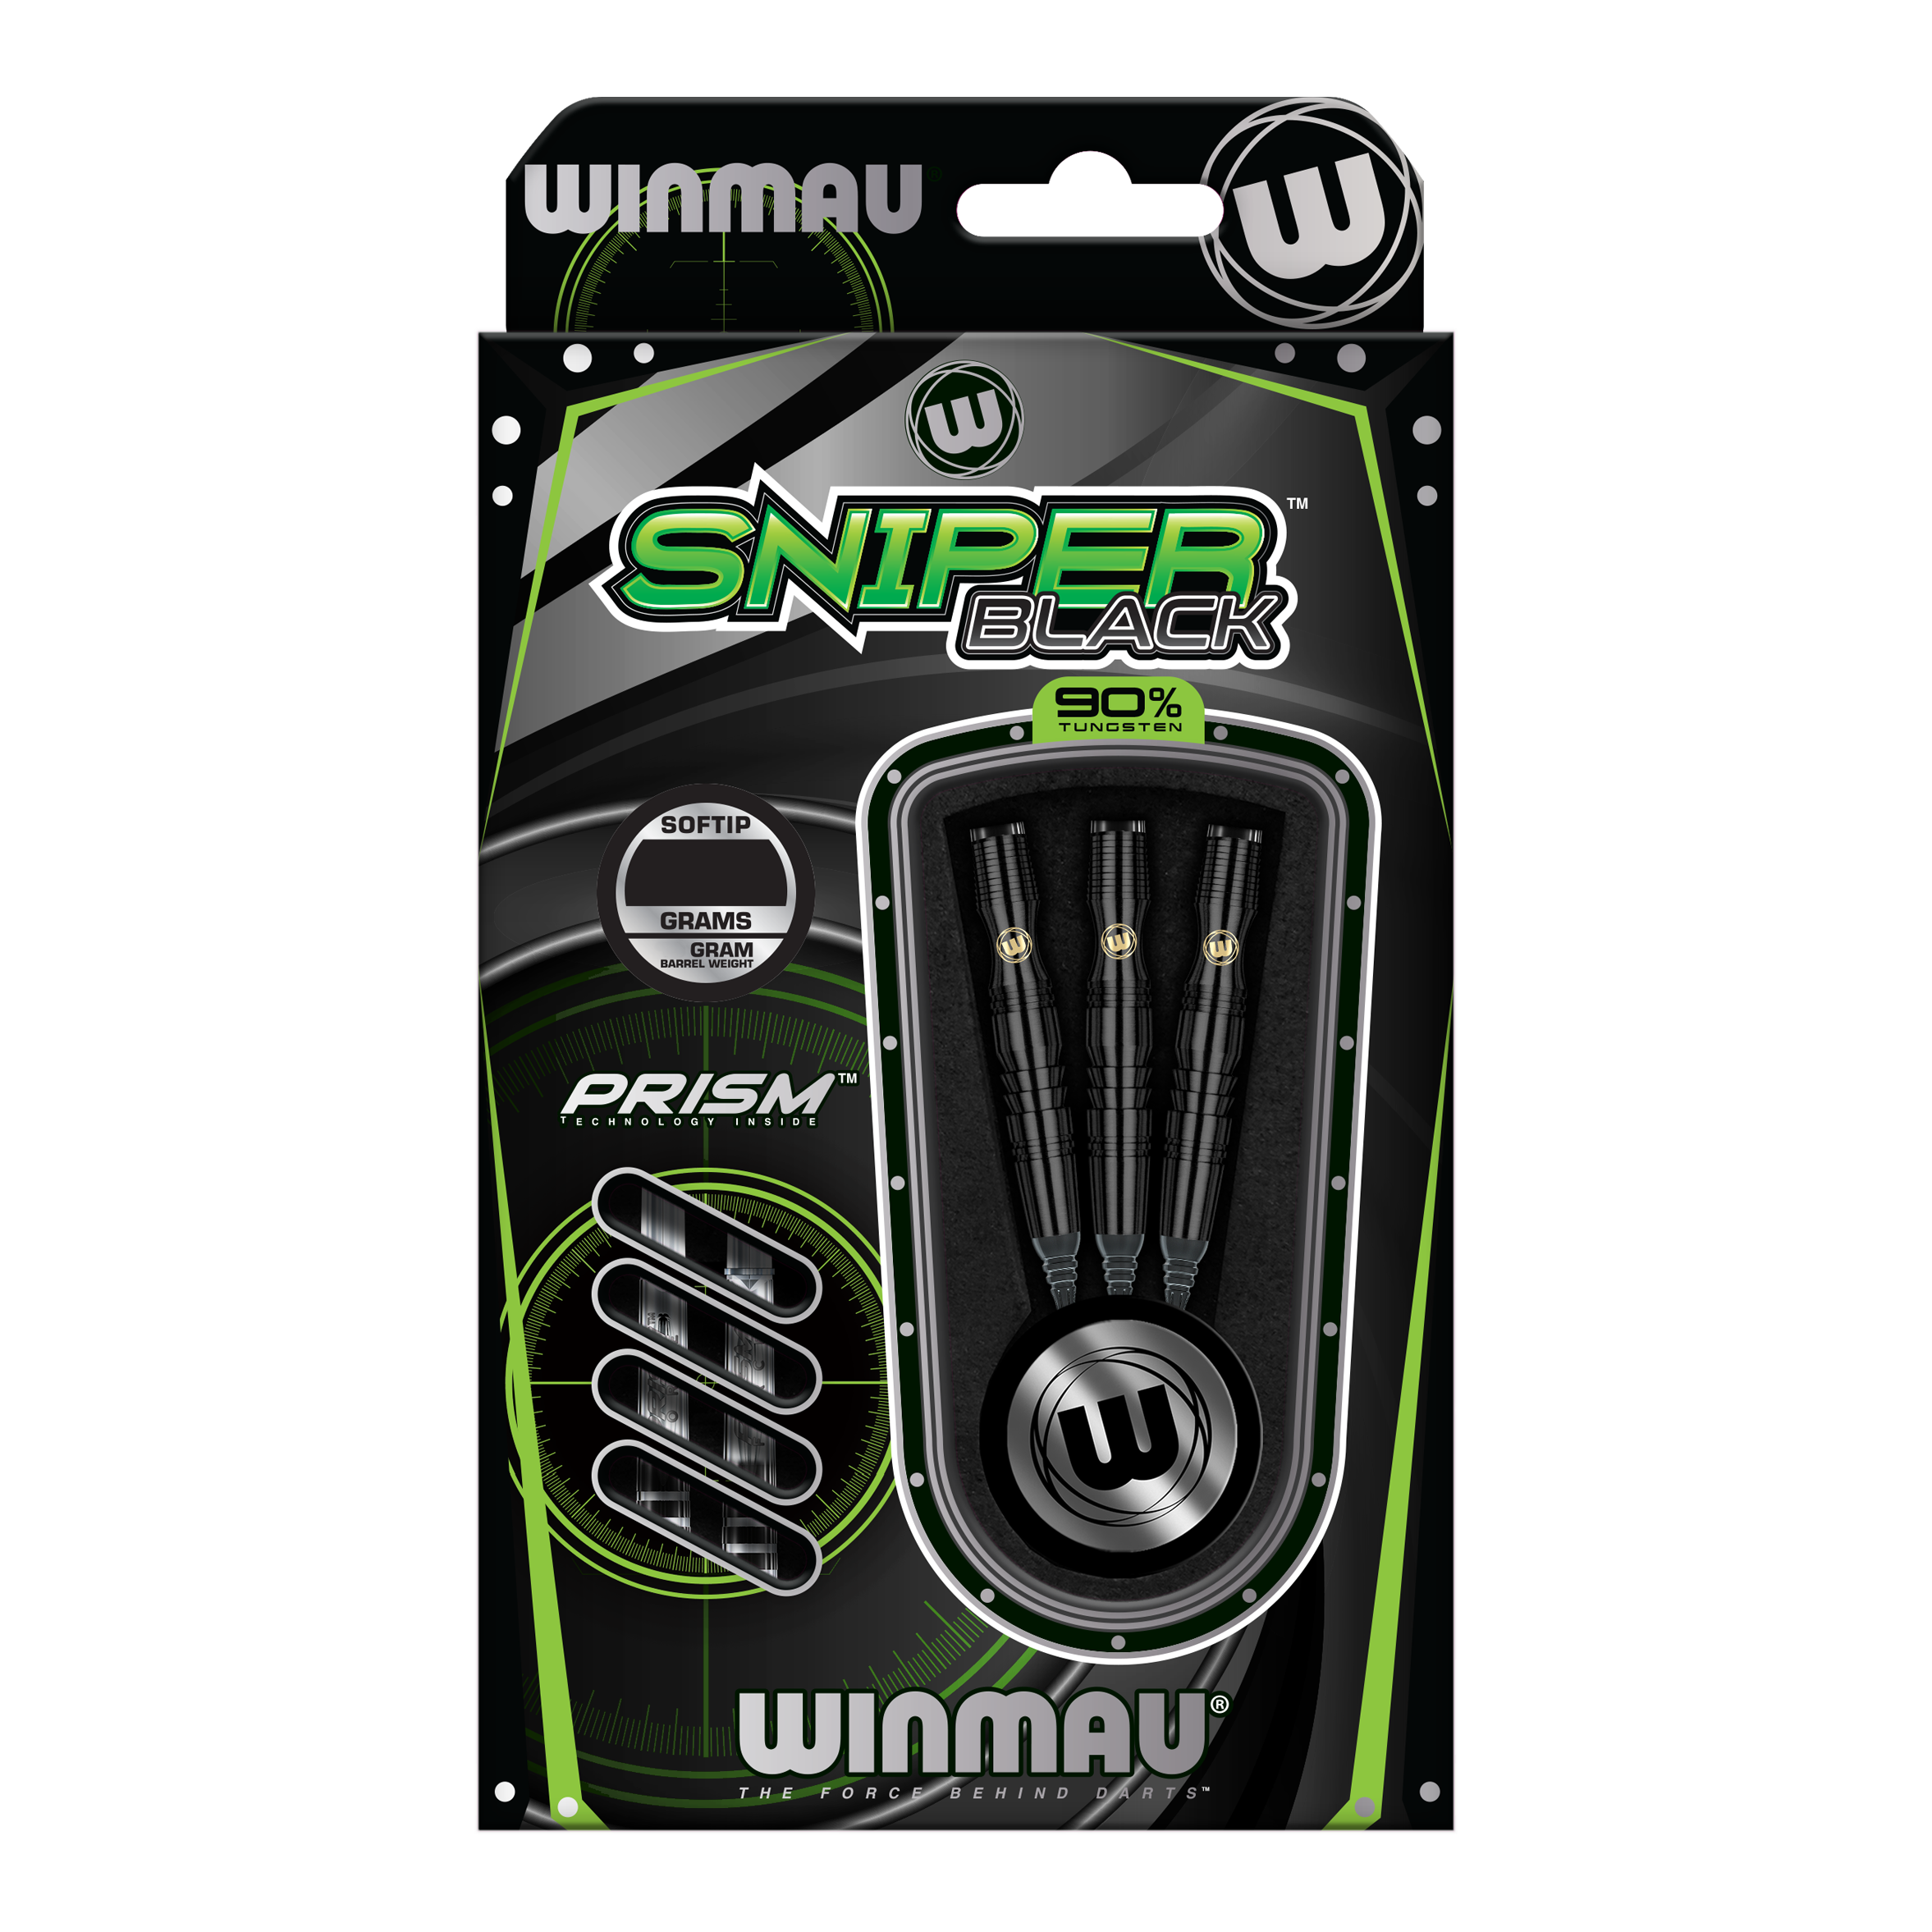 Winmau Sniper Black Softdarts - 20g